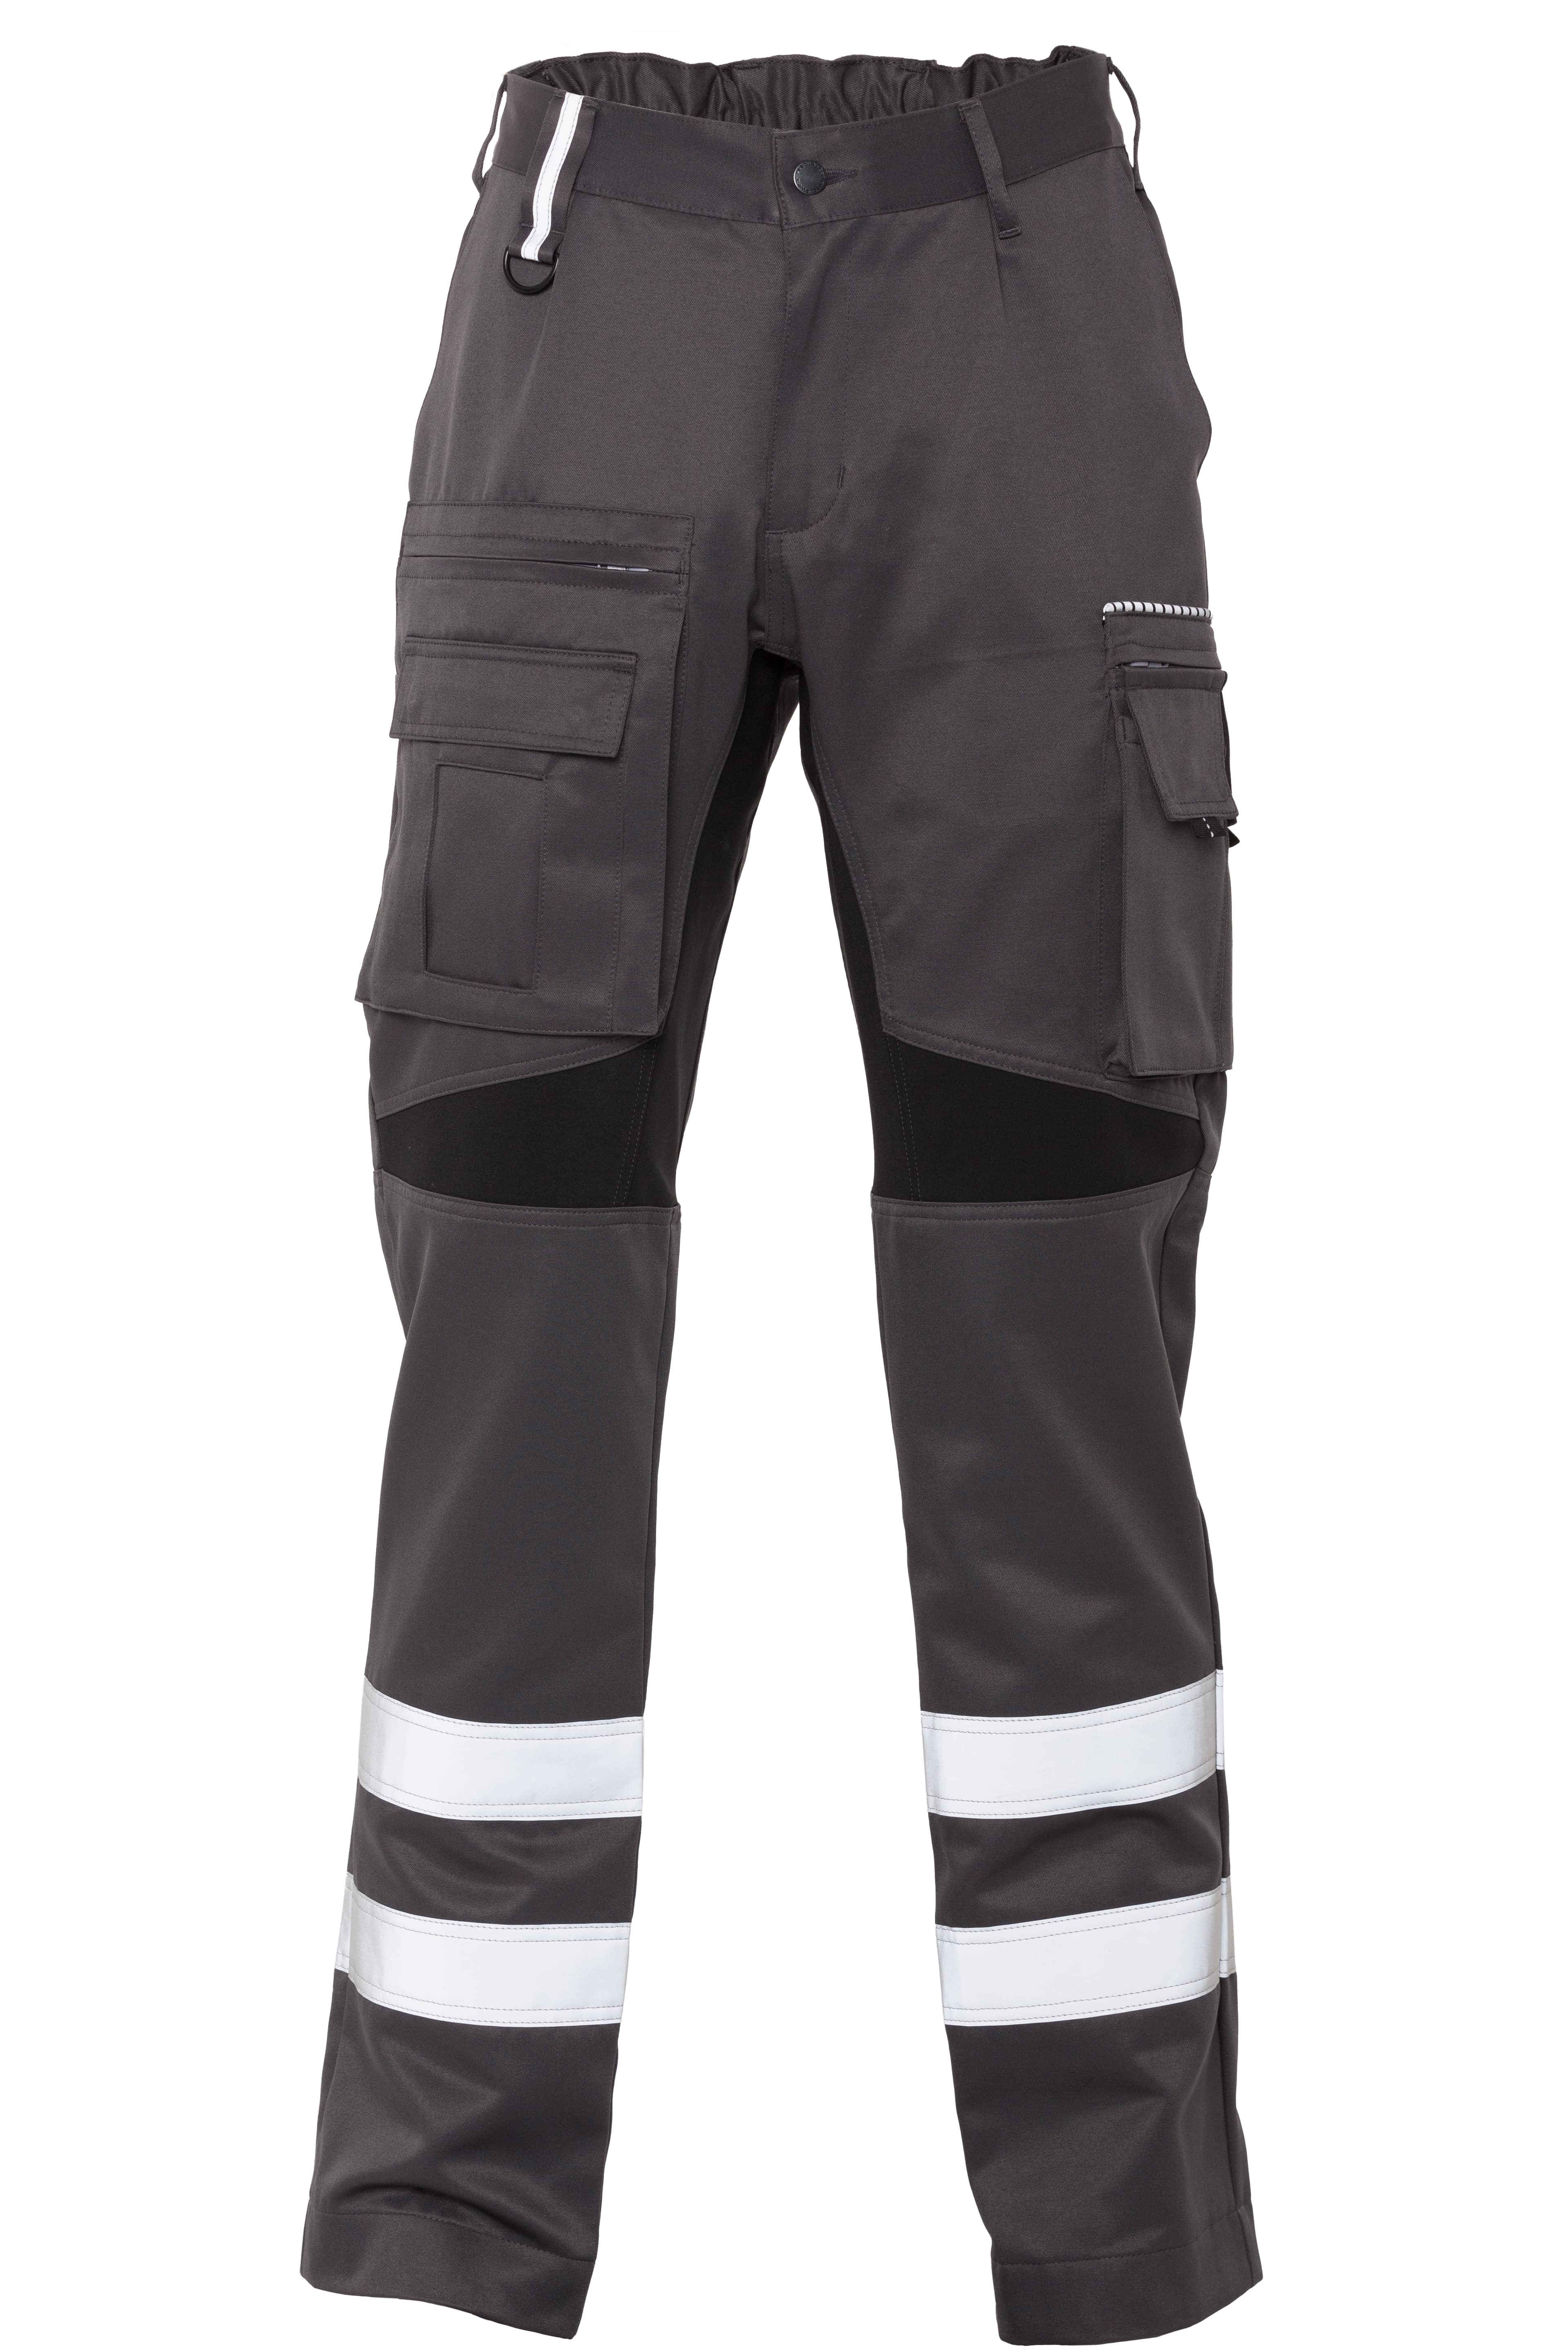 Rescuewear Unisex Hose 33406 Advanced Grau mit Stretch Schwarz